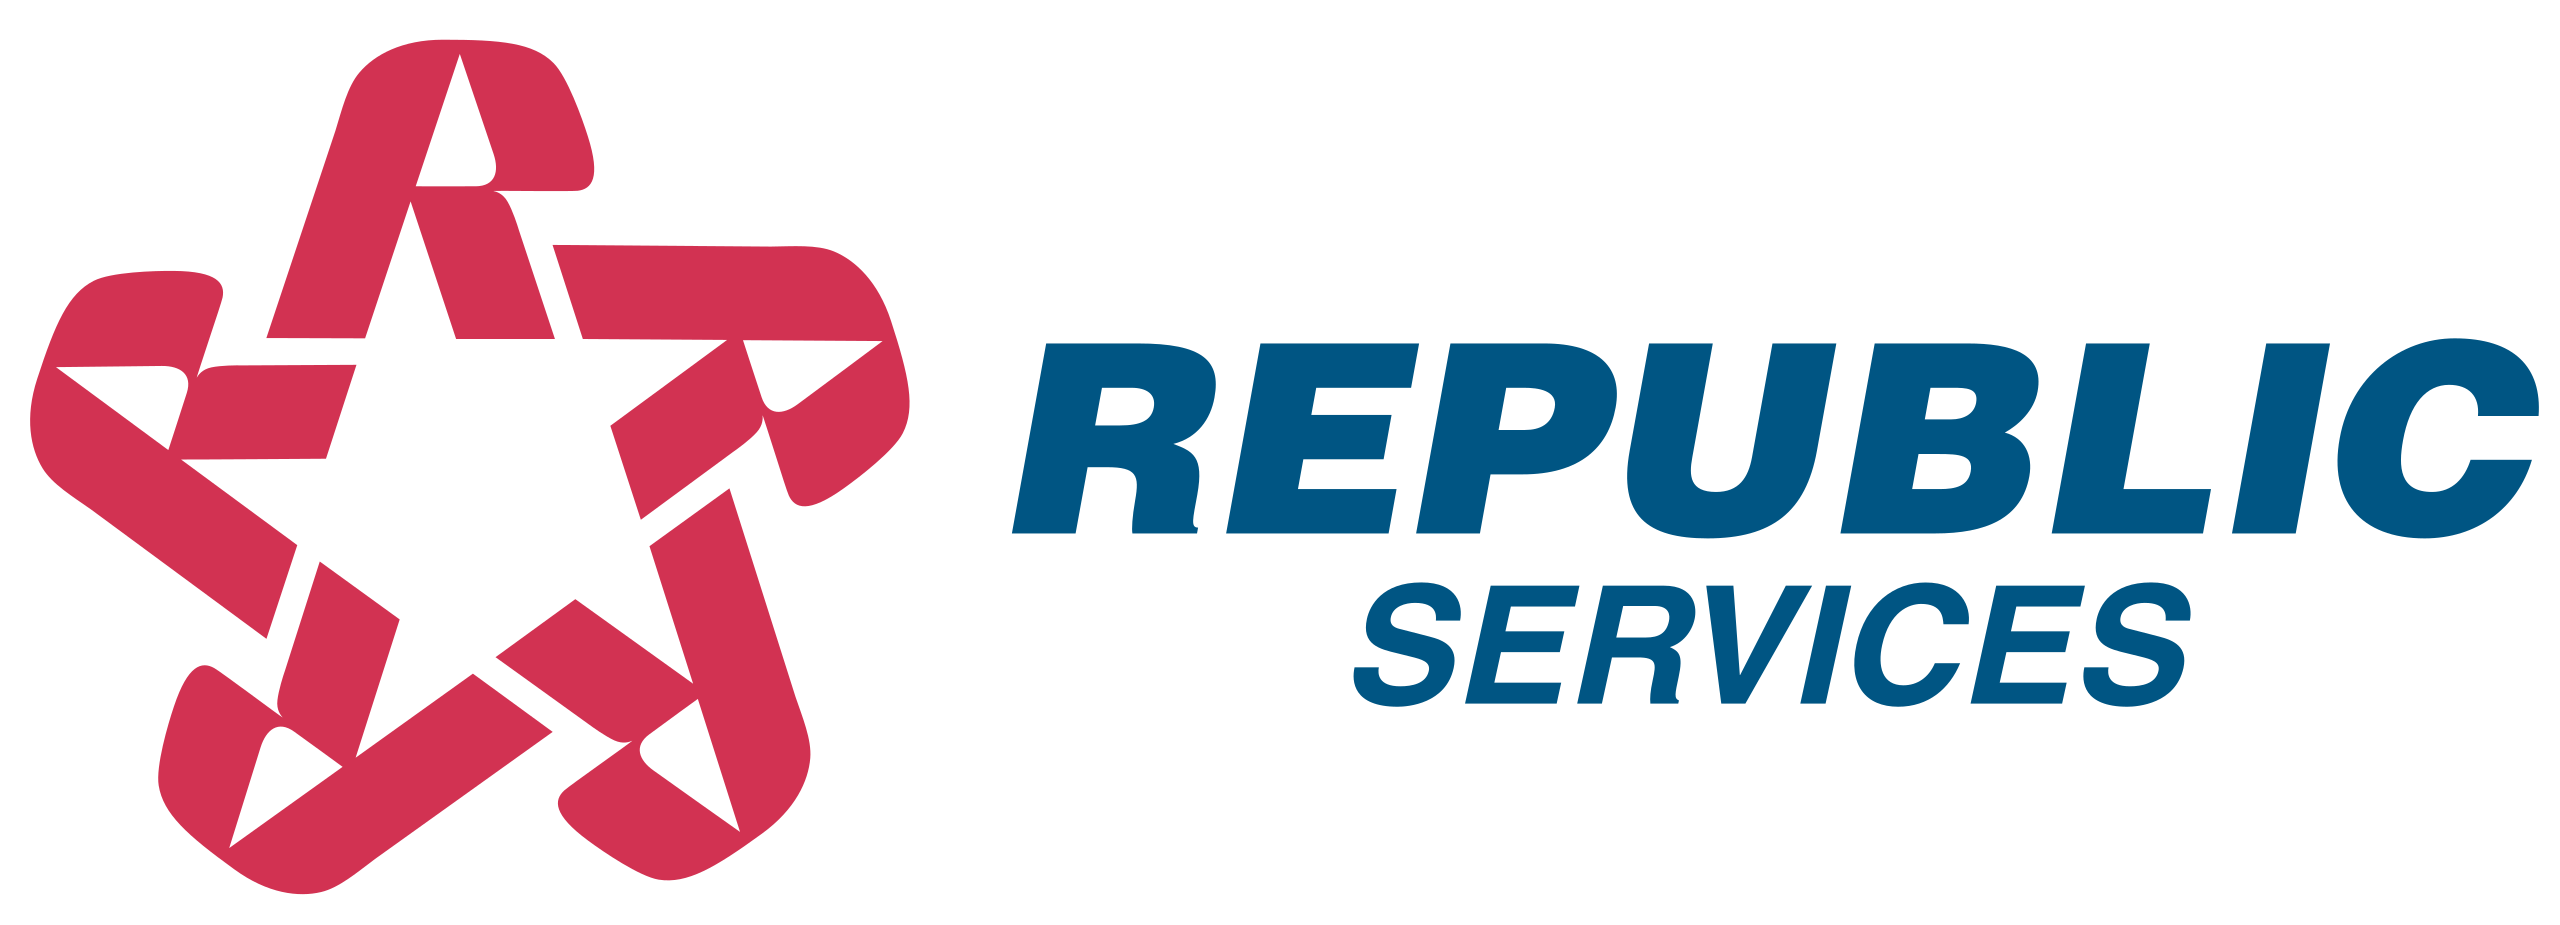 14_Republic Services (1)